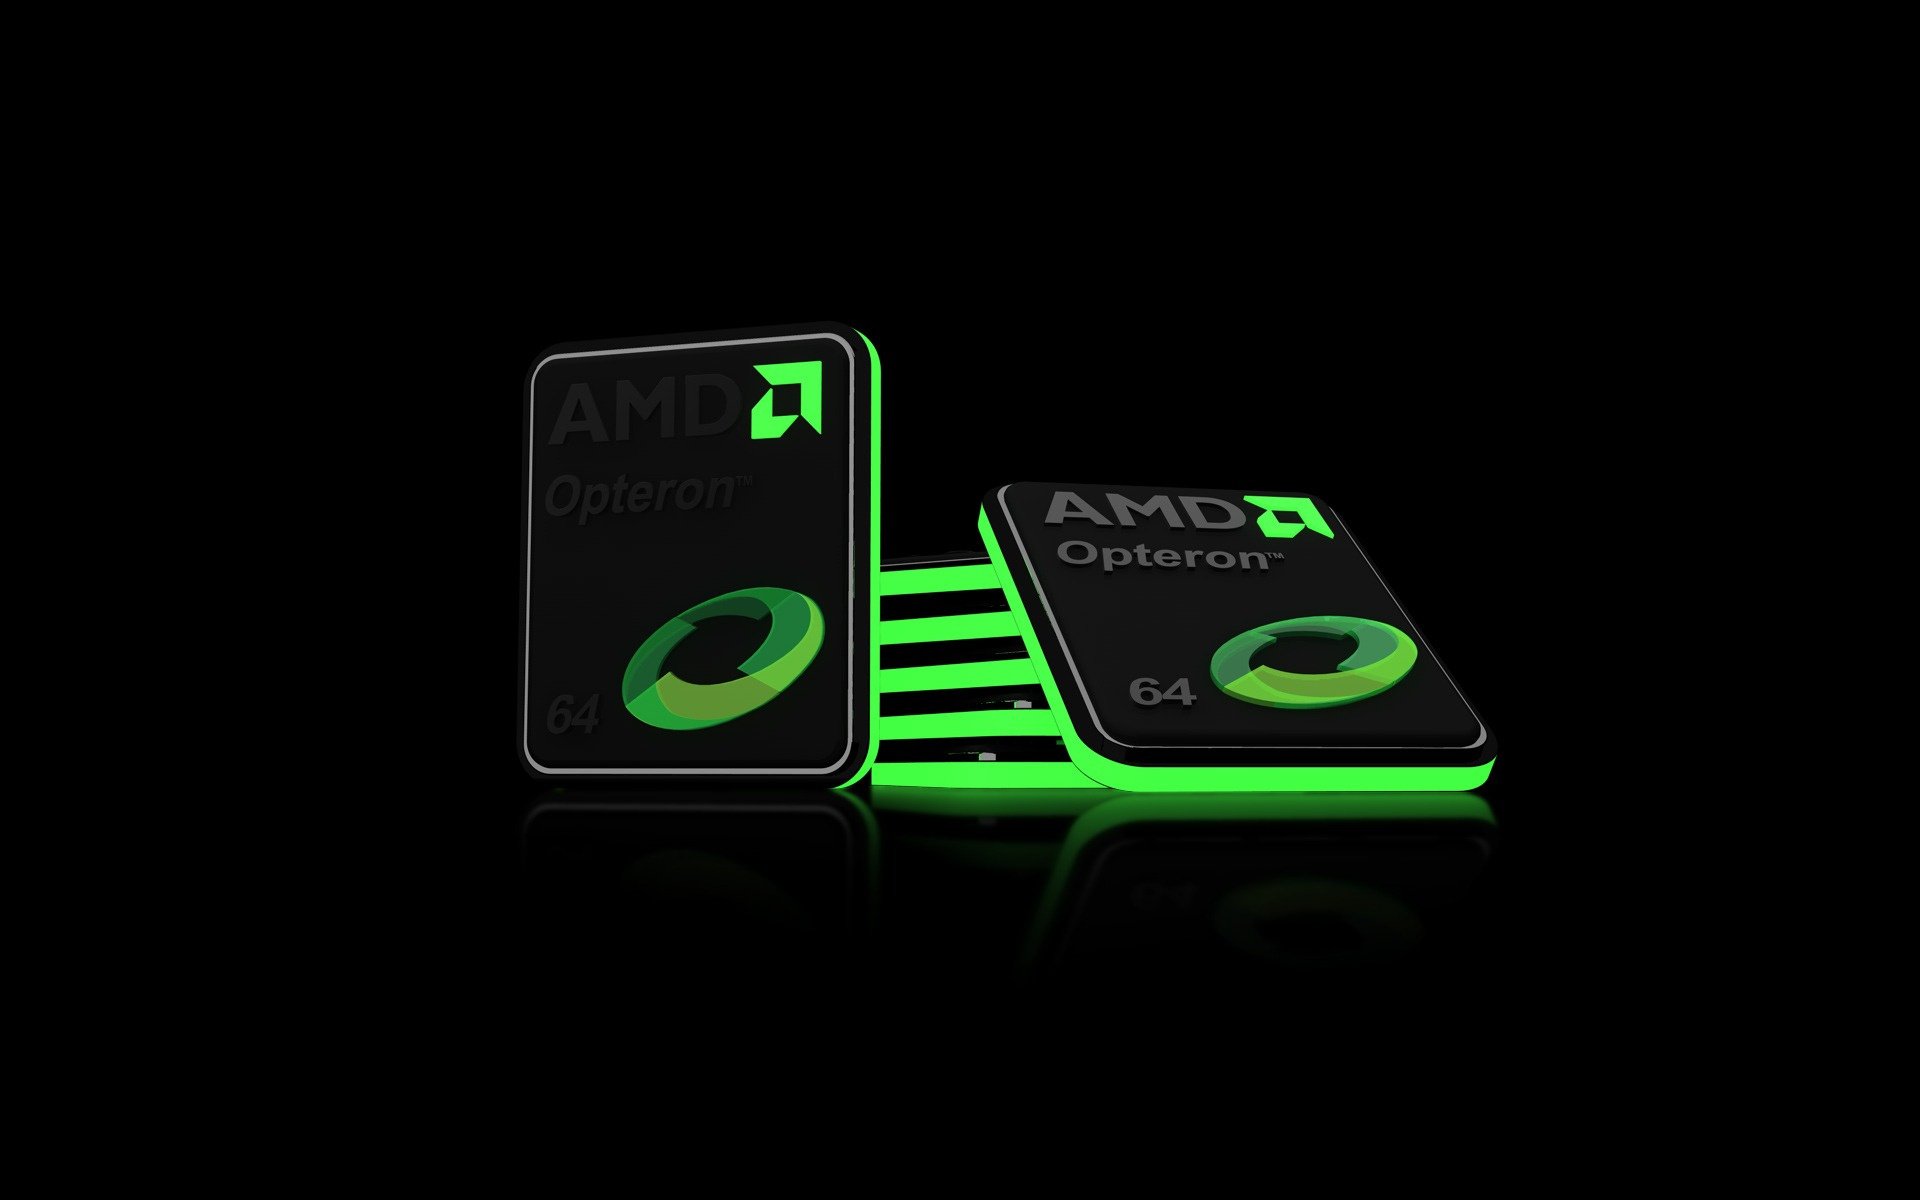 Черно-зелёный логотип АMD